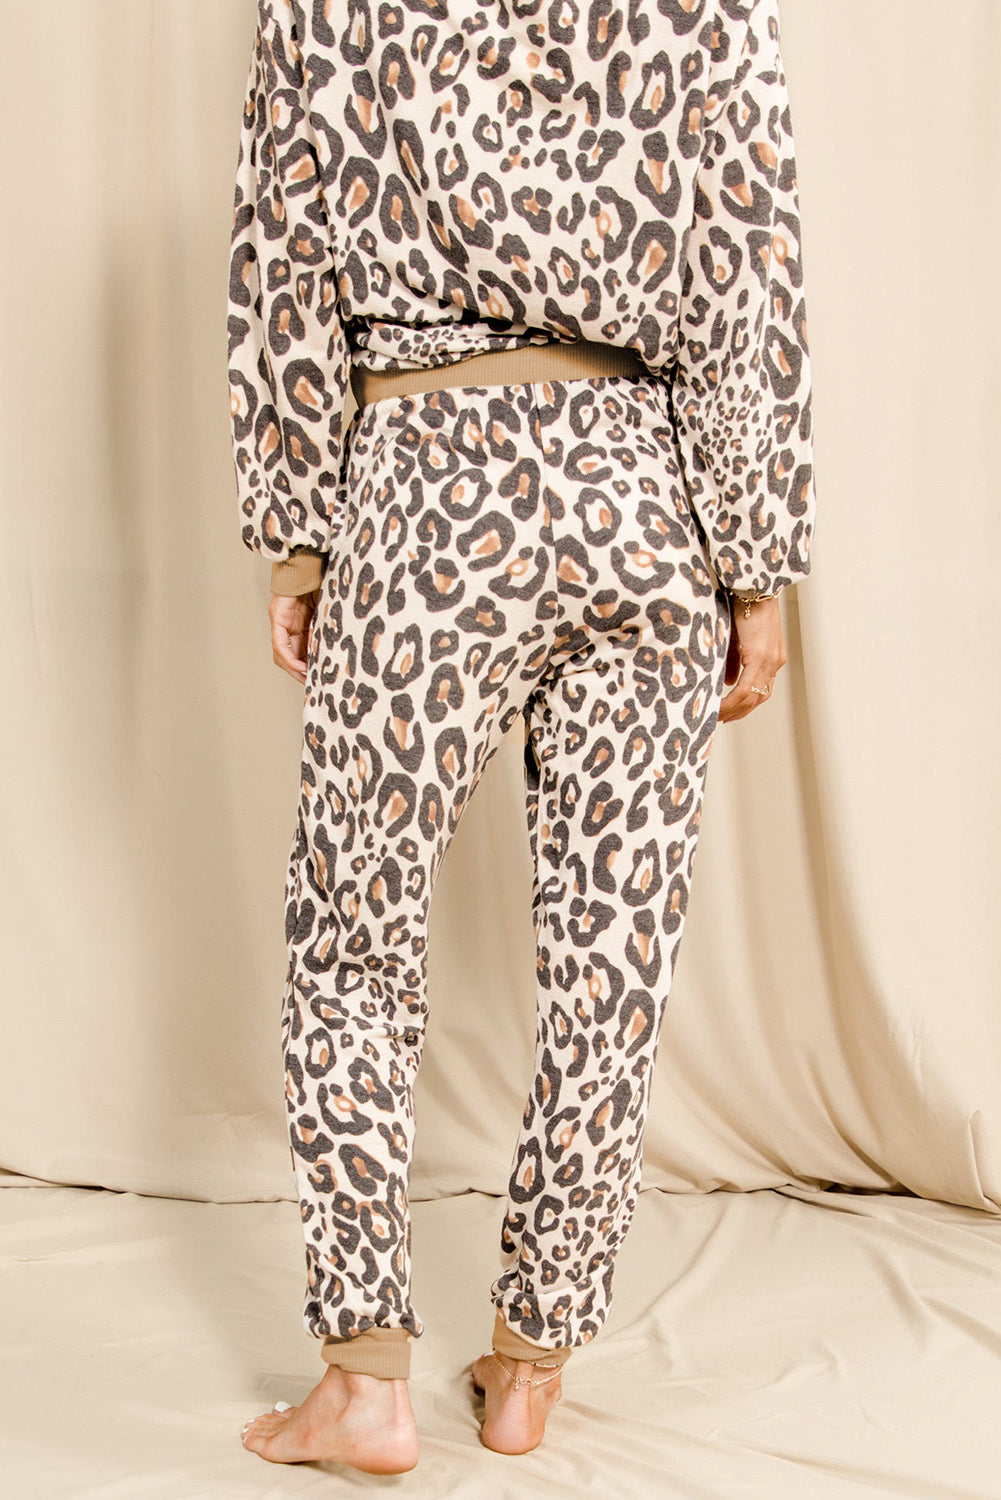 Leopard Print Long Sleeve Top and Drawstring Womens PantsLoungewear - US2EInc Apparel Plug Ltd. Co